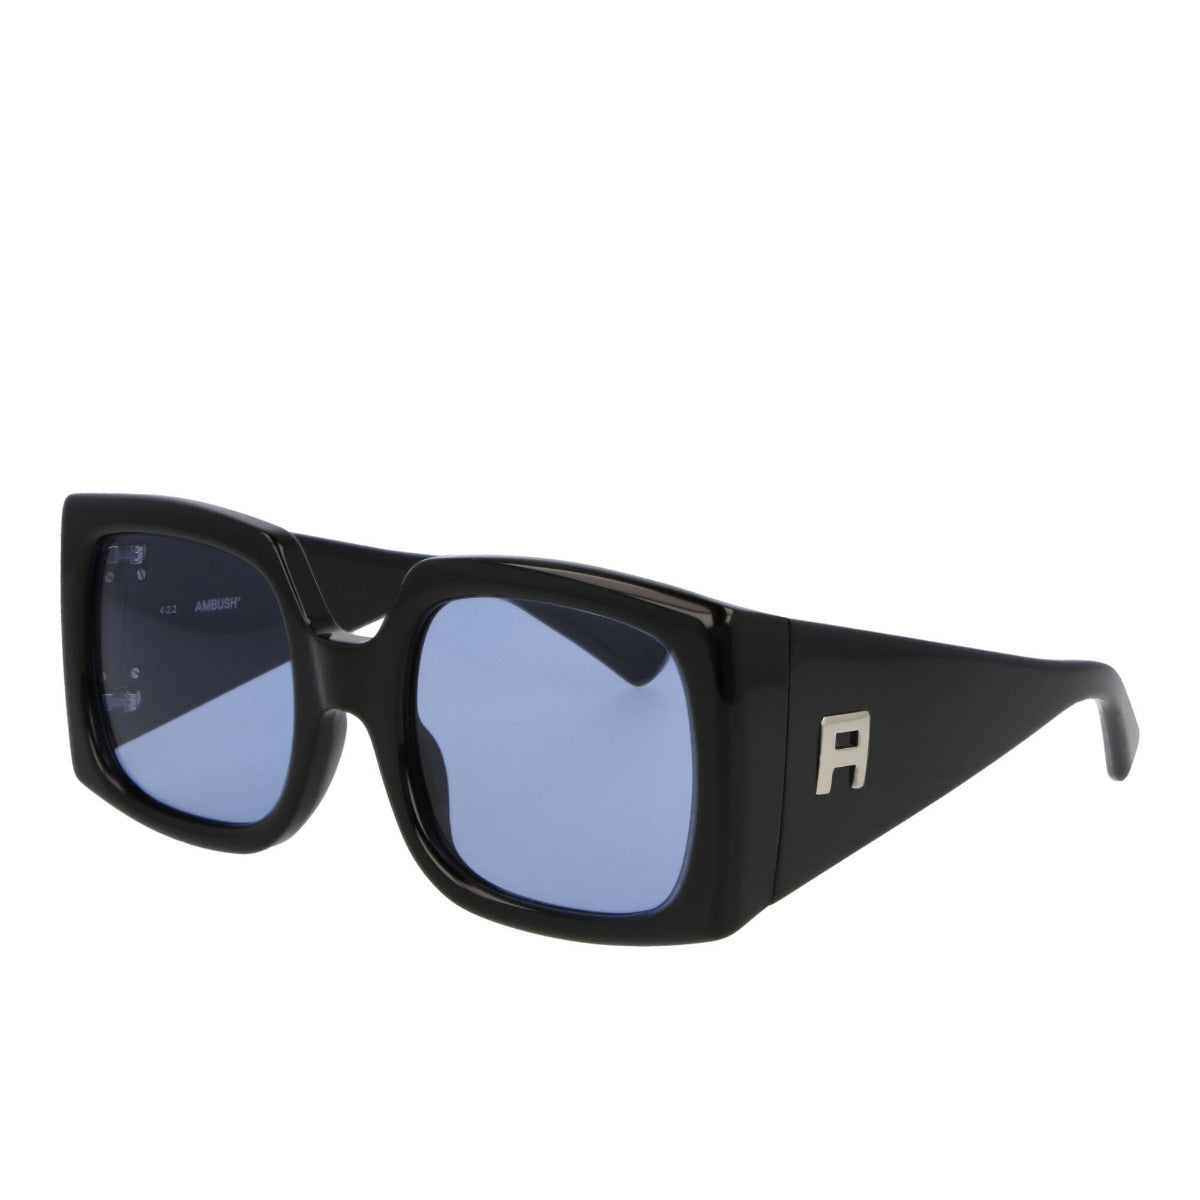 Fhonix Sunglasses